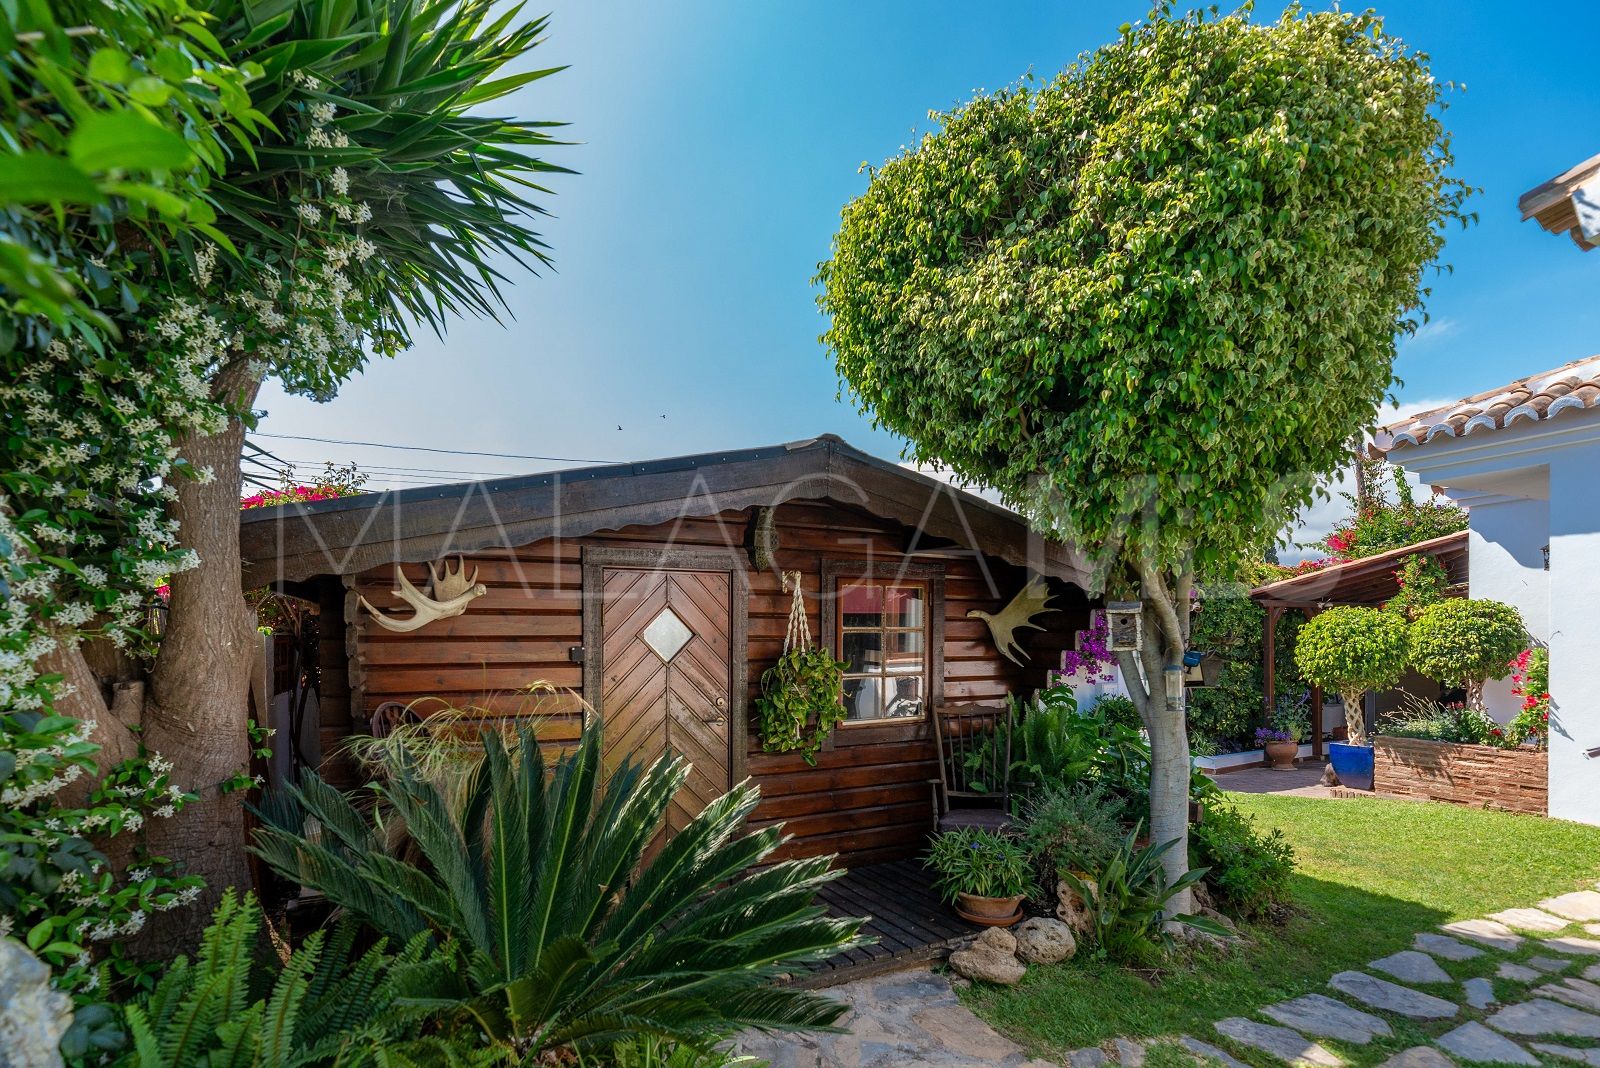 Villa for sale in Linda Vista Baja with 3 bedrooms